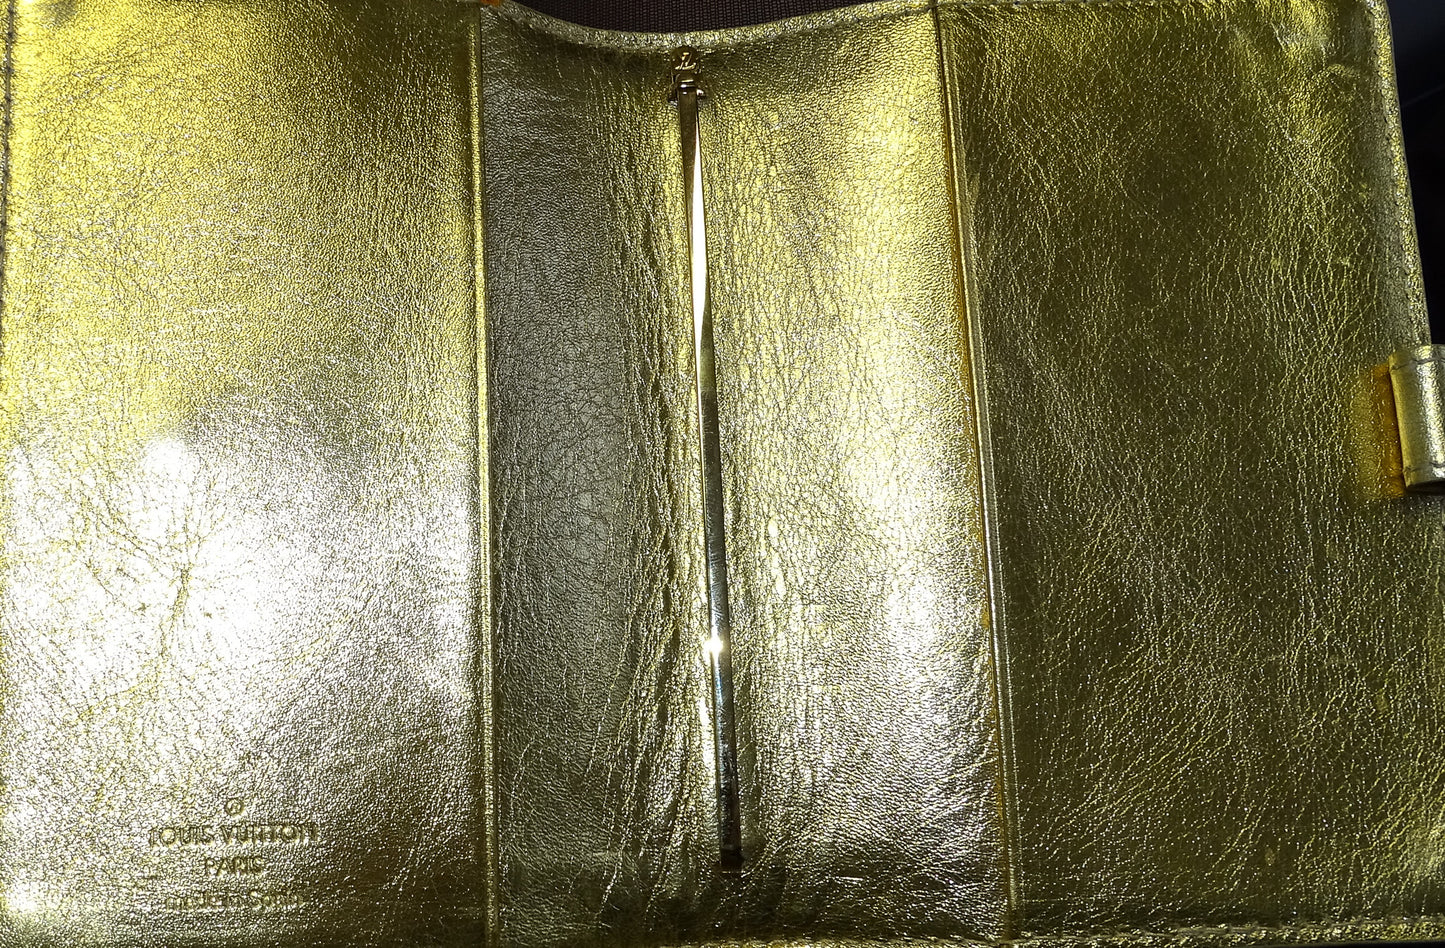 Louis Vuitton Gold Suhali Partenaire Agenda/Notebook Cover CA4067